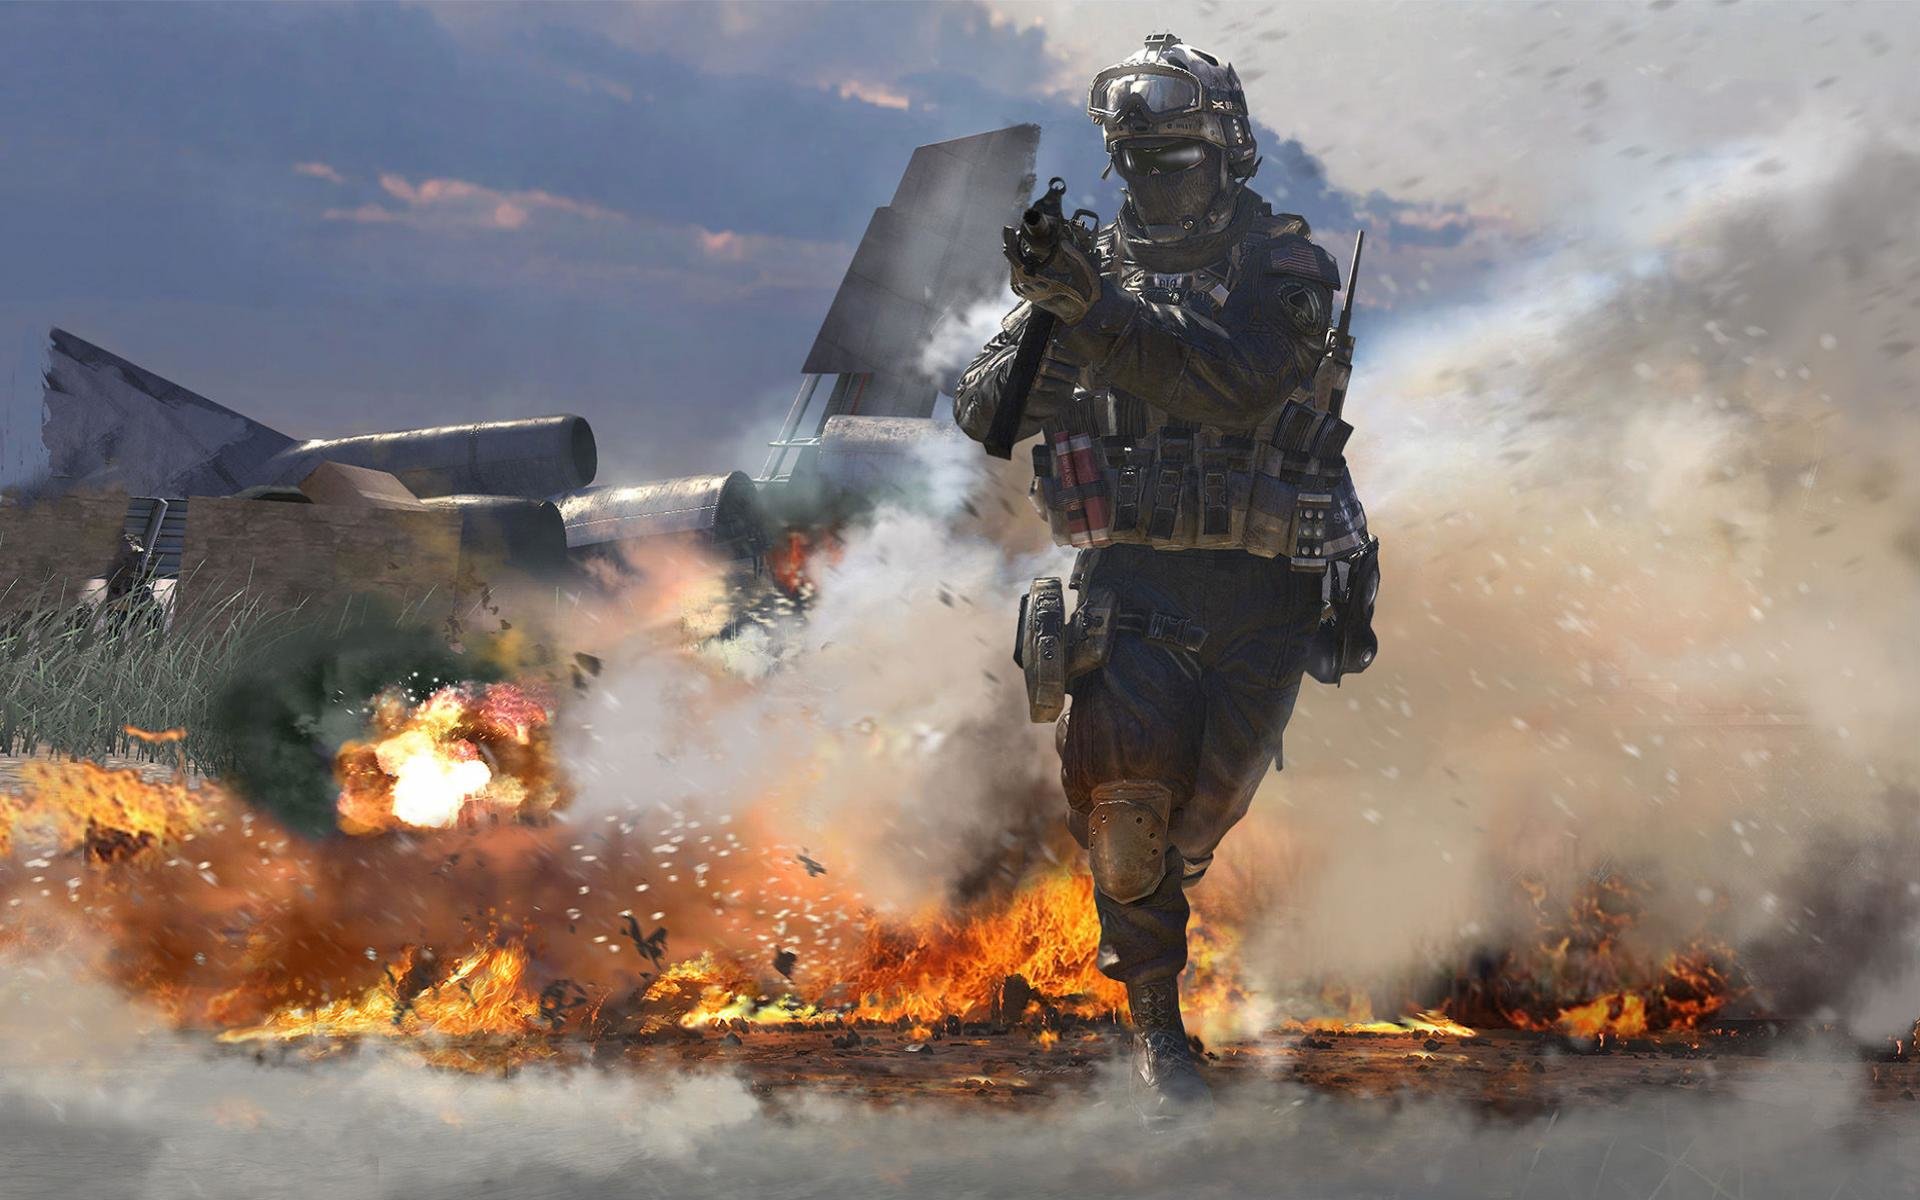 Best Call Of Duty 4: Modern Warfare wallpaper ID:20560 for High Resolution hd 1920x1200 PC